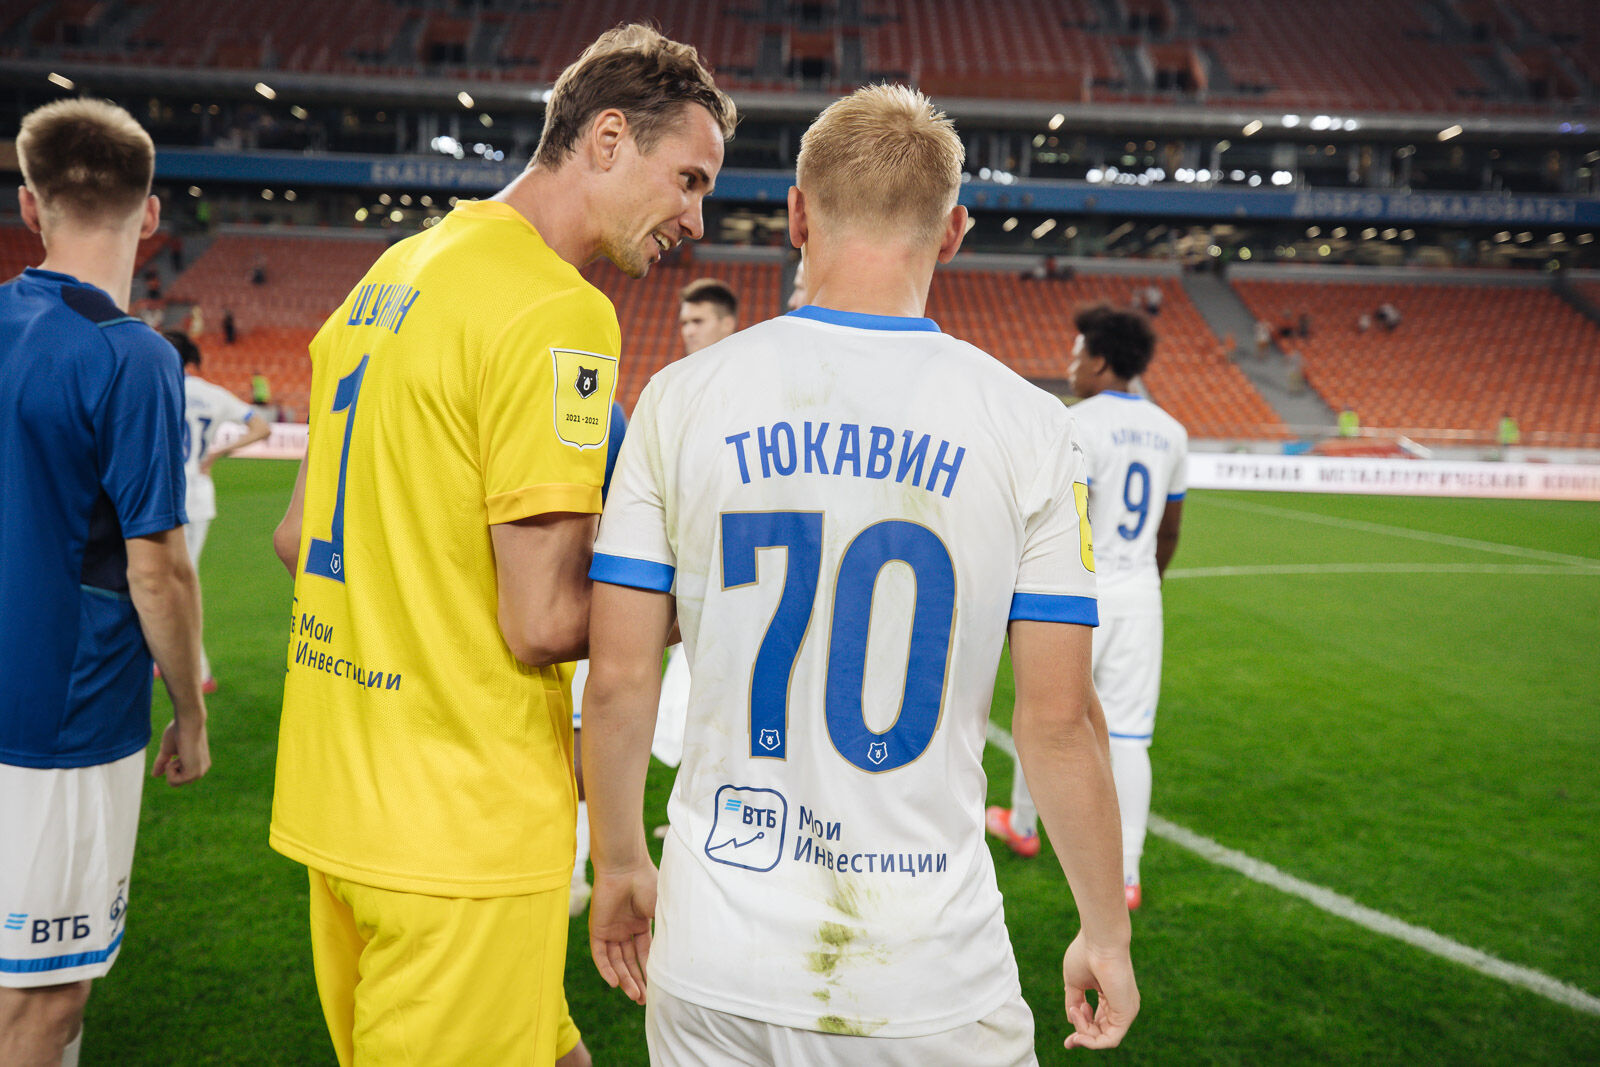 Dynamo Moscow team | Anton Shunin — goalkeeper. Dynamo Moscow official website